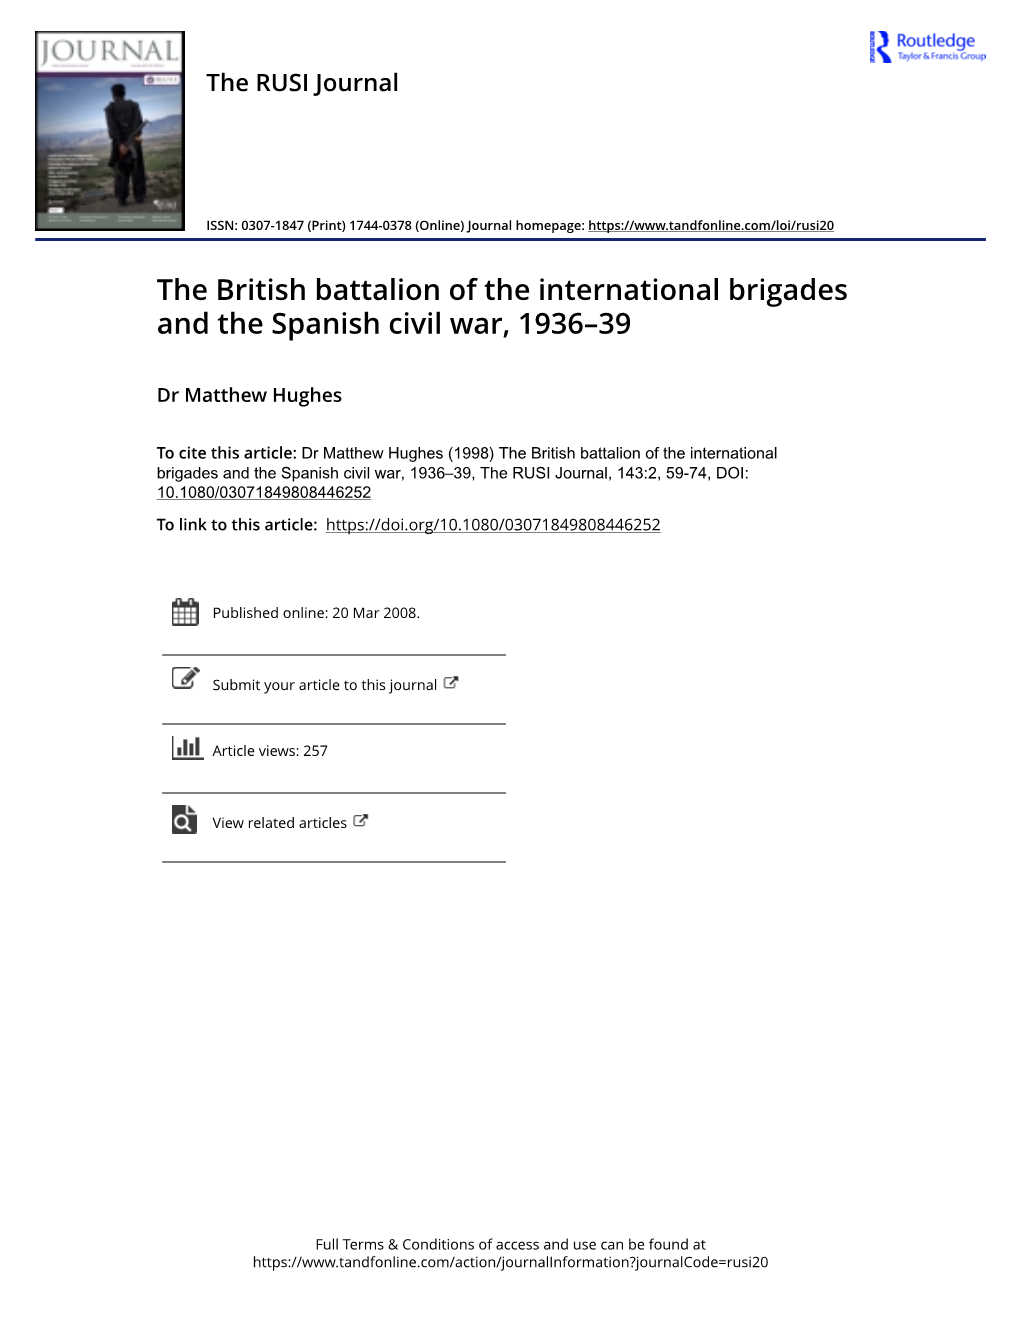 The British Battalion of the International Brigades and the Spanish Civil War, 1936–39